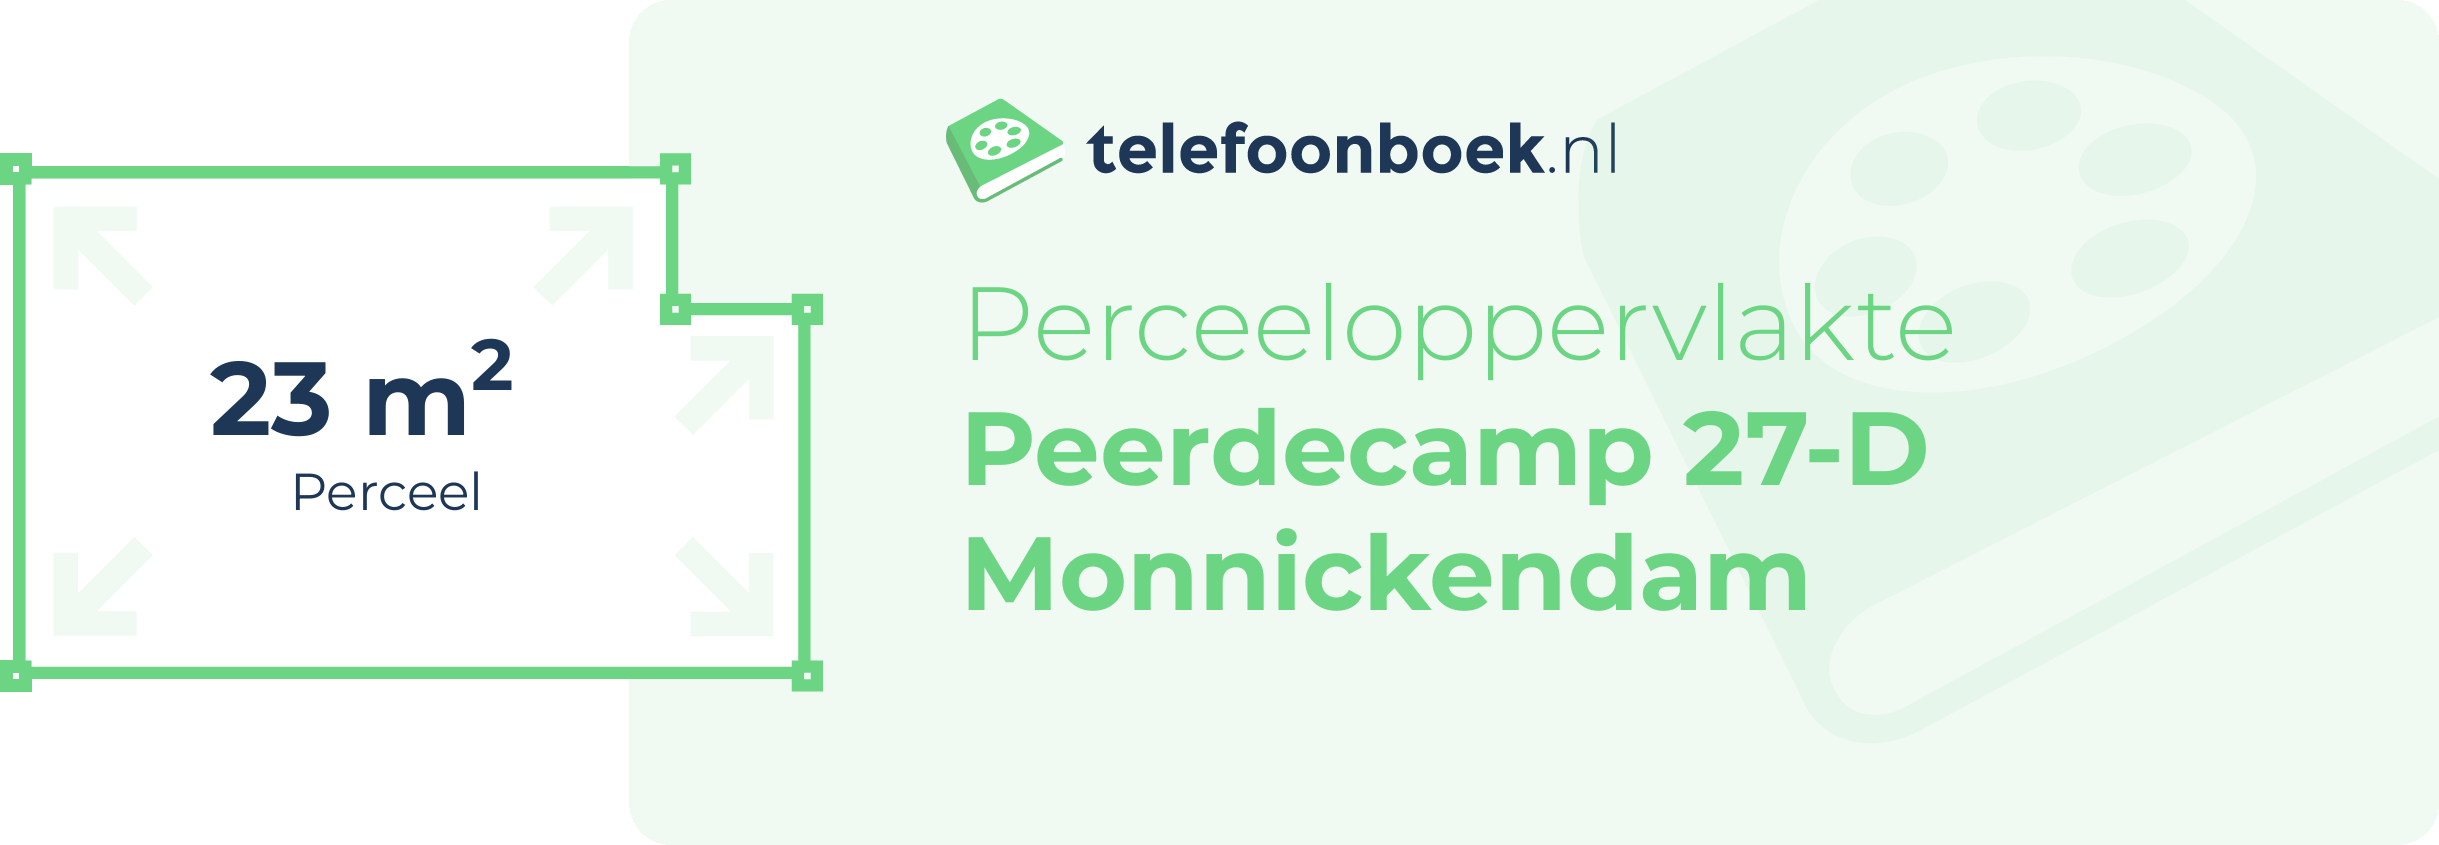 Perceeloppervlakte Peerdecamp 27-D Monnickendam